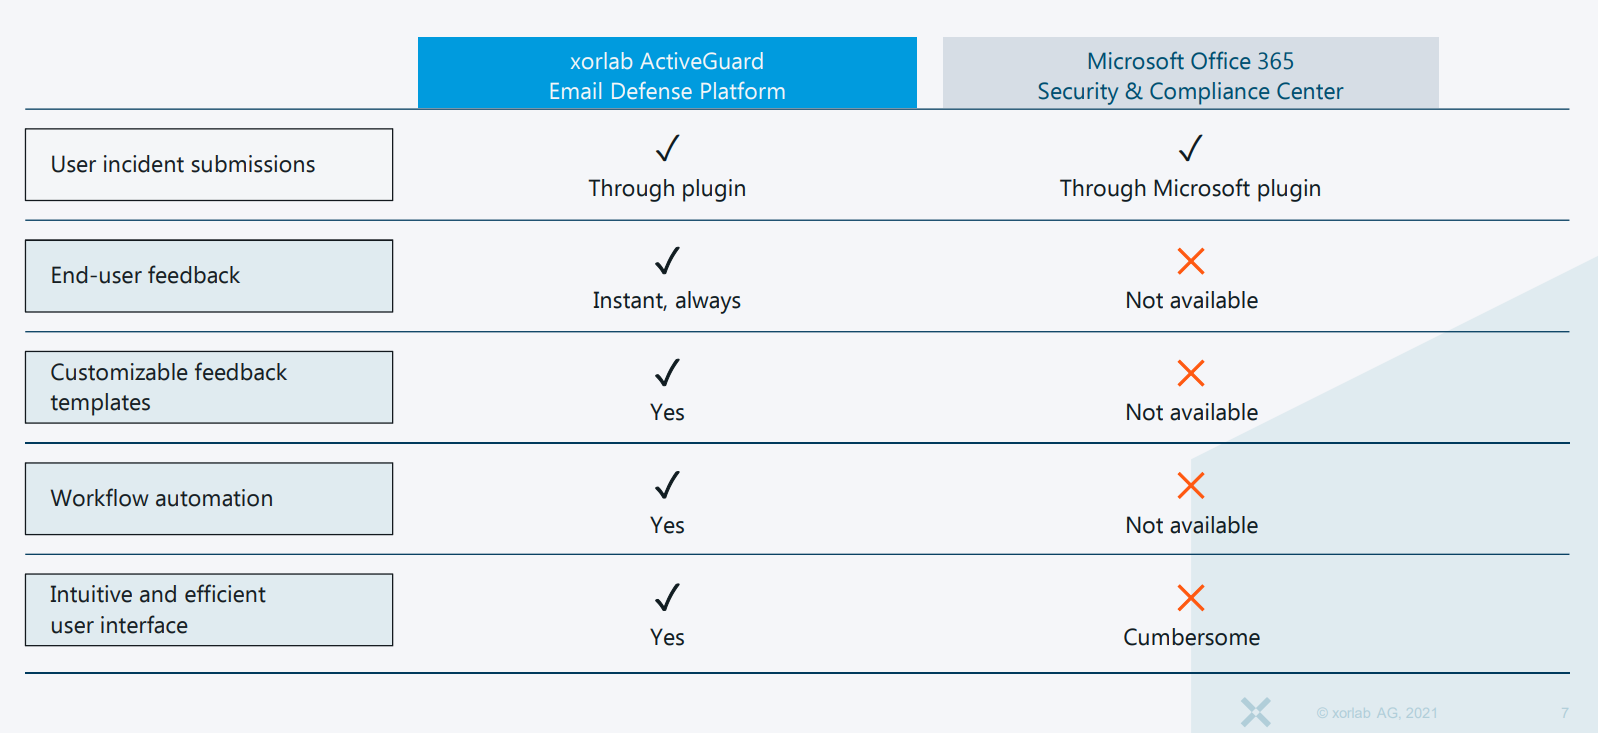 Vergleich xorlab ActiveGuard Email Defense Platform vs. Microsoft Office 365 Security & Compliance Center